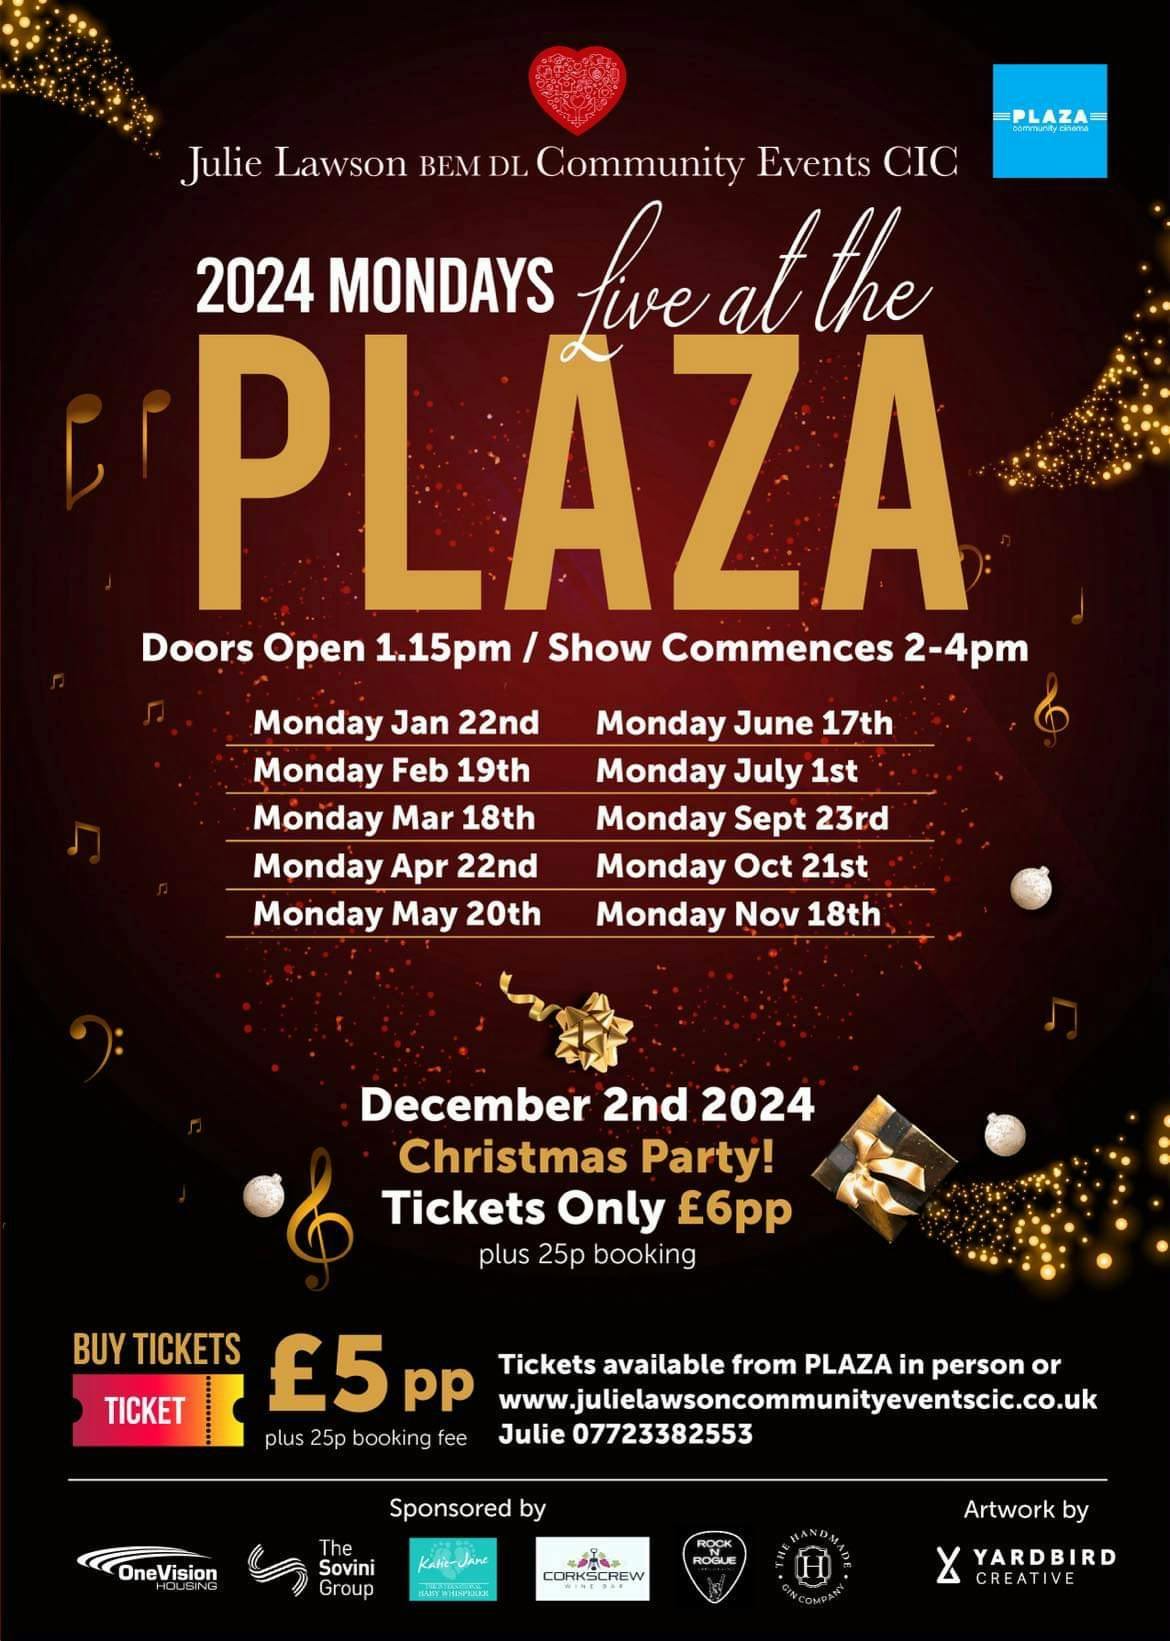 Live at the Plaza 2024 Plaza Cinema